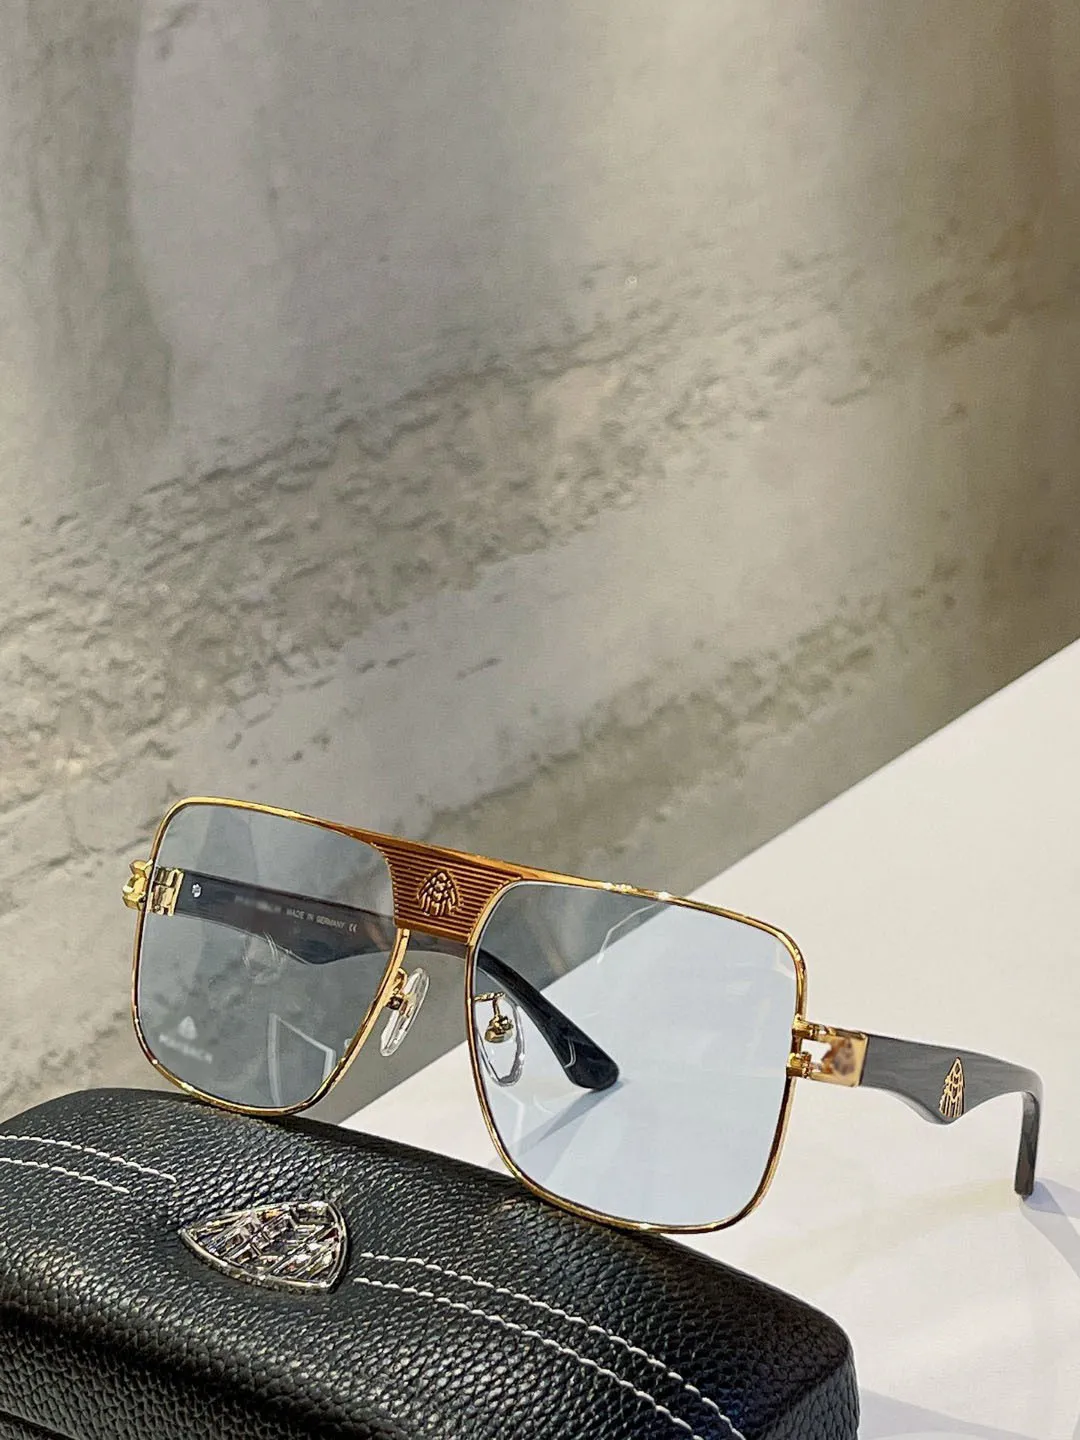 MAYBA GPA- AB- Z35 Top Original high quality Designer Sunglasses mens famous fashionable retro luxury brand eyeglass Fashion desig241p